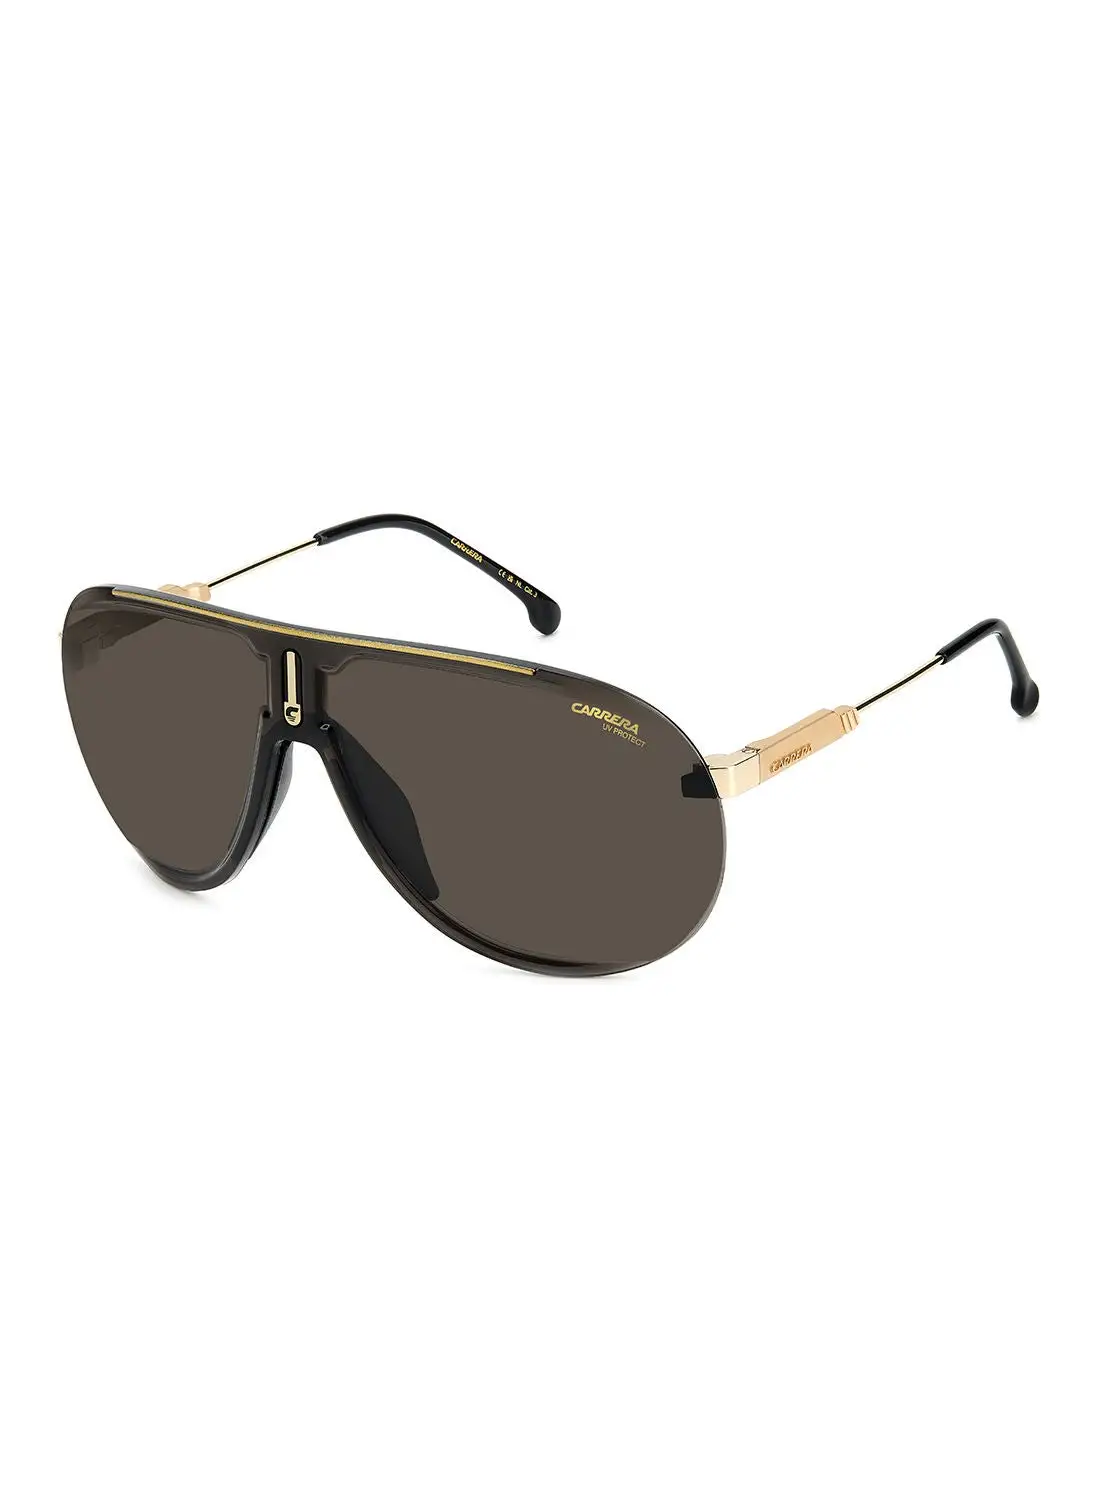 Carrera Unisex UV Protection Pilot Sunglasses - Super Champion Black/Gold 99 - Lens Size: 99 Mm